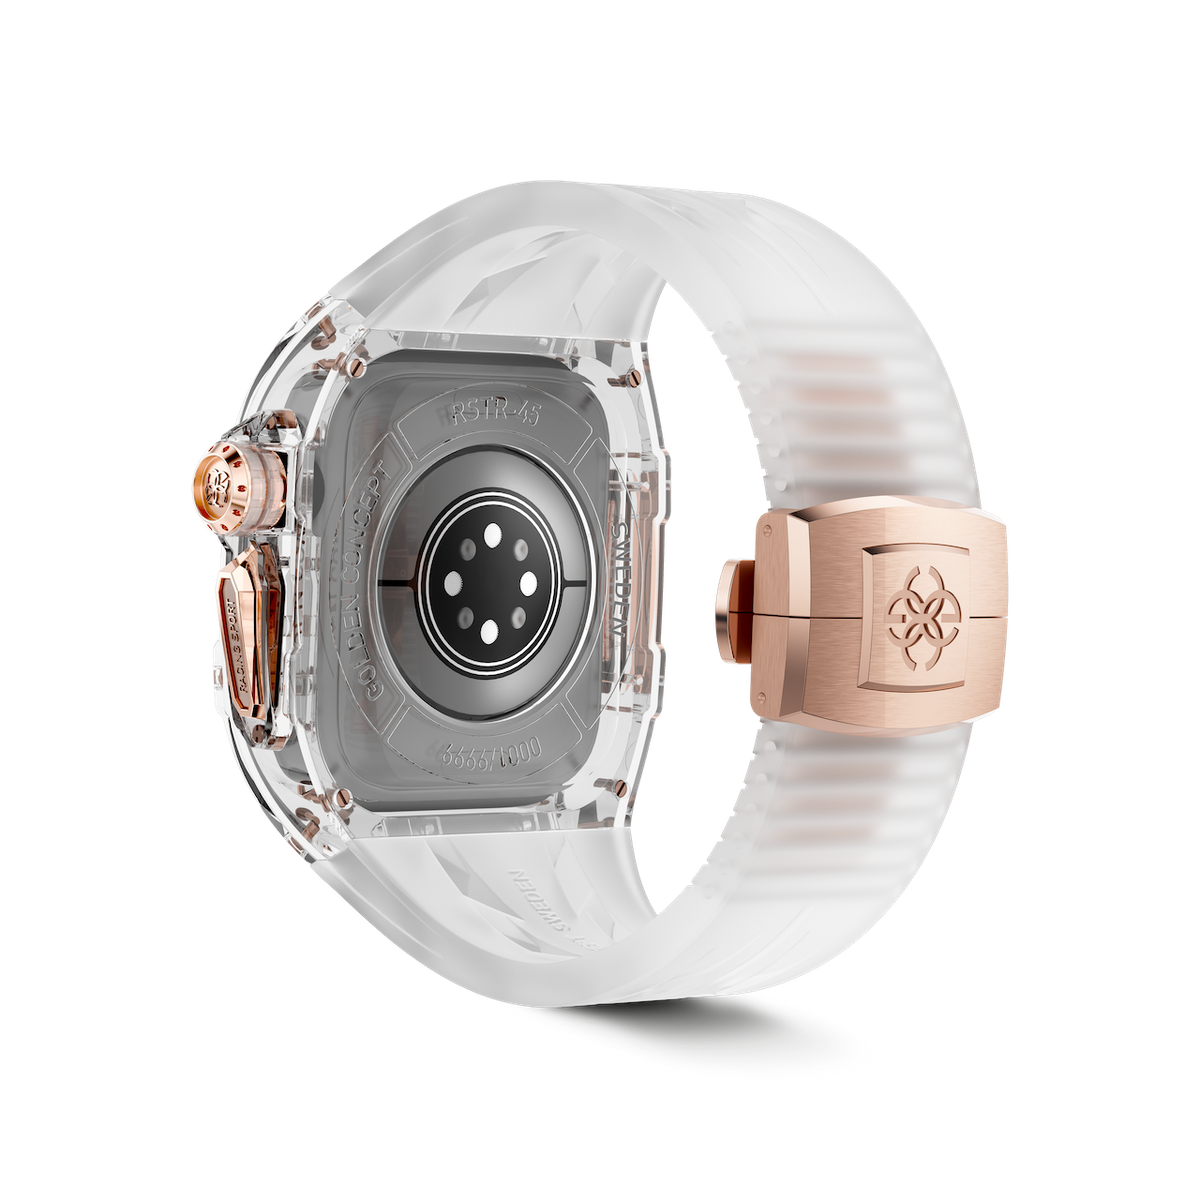 Apple Watch Case - RSTR45 - CRYSTAL ROSE – ゴールデンコンセプト 